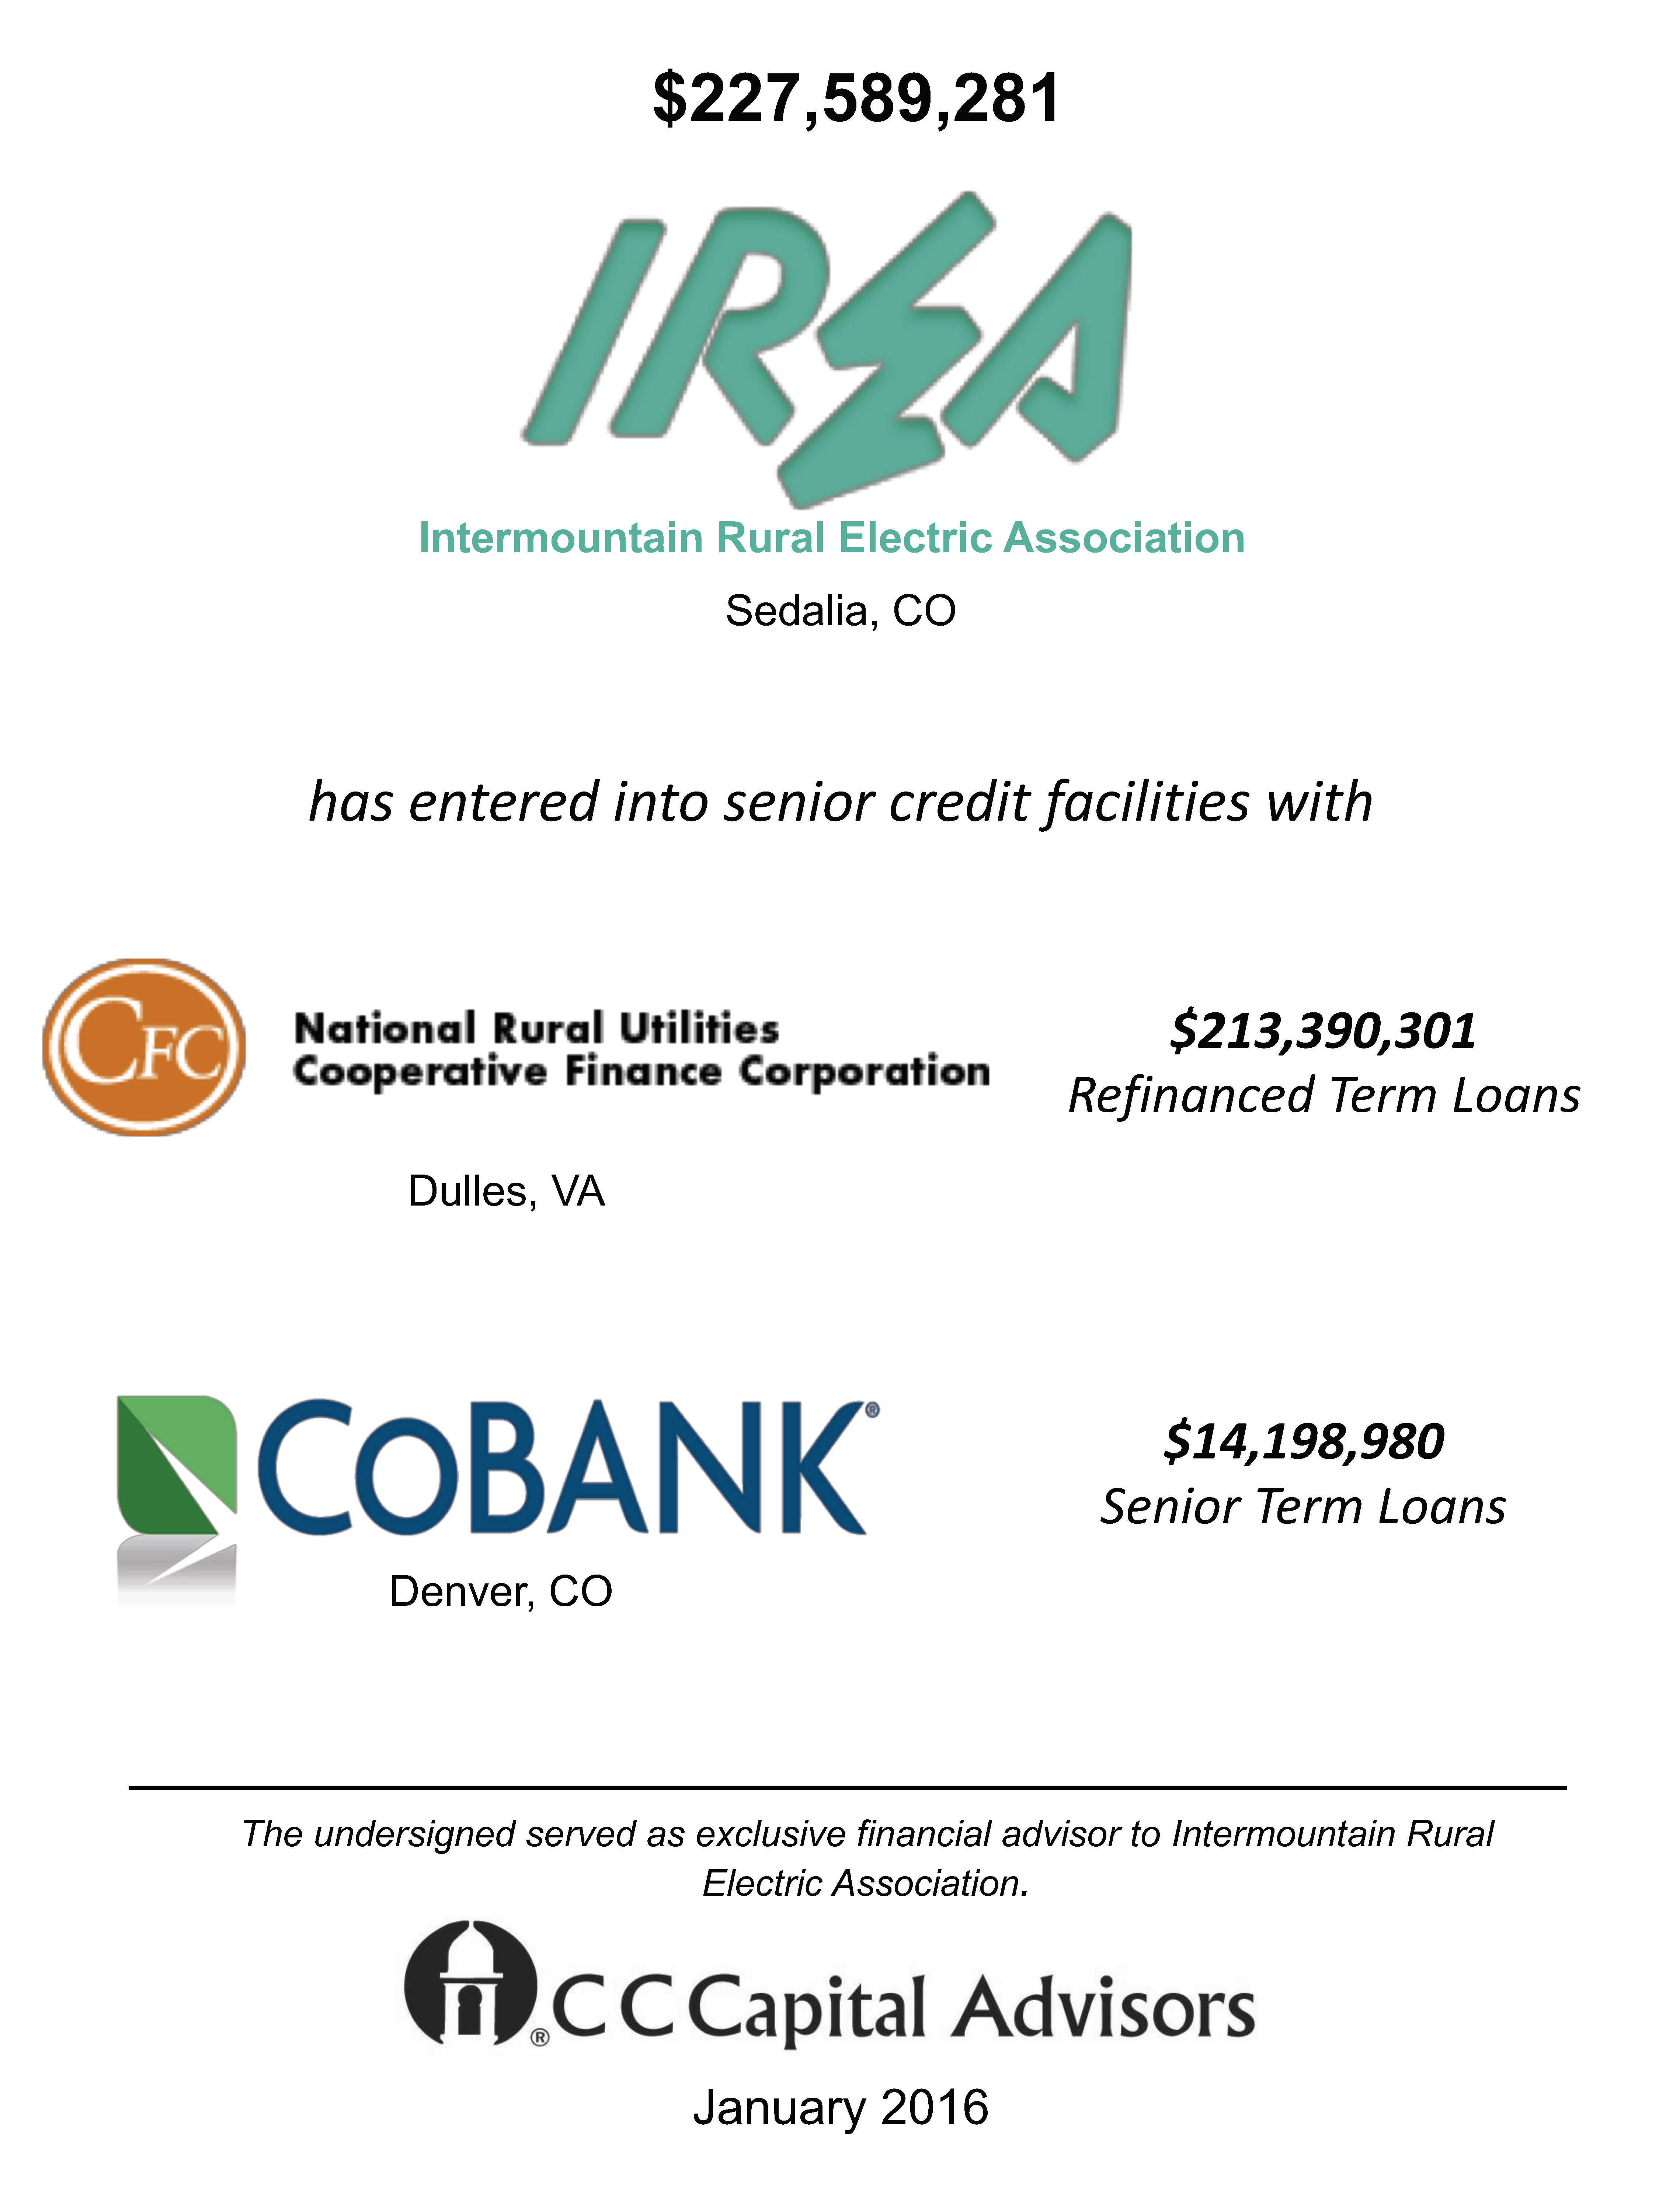 IREA - CoBank transaction